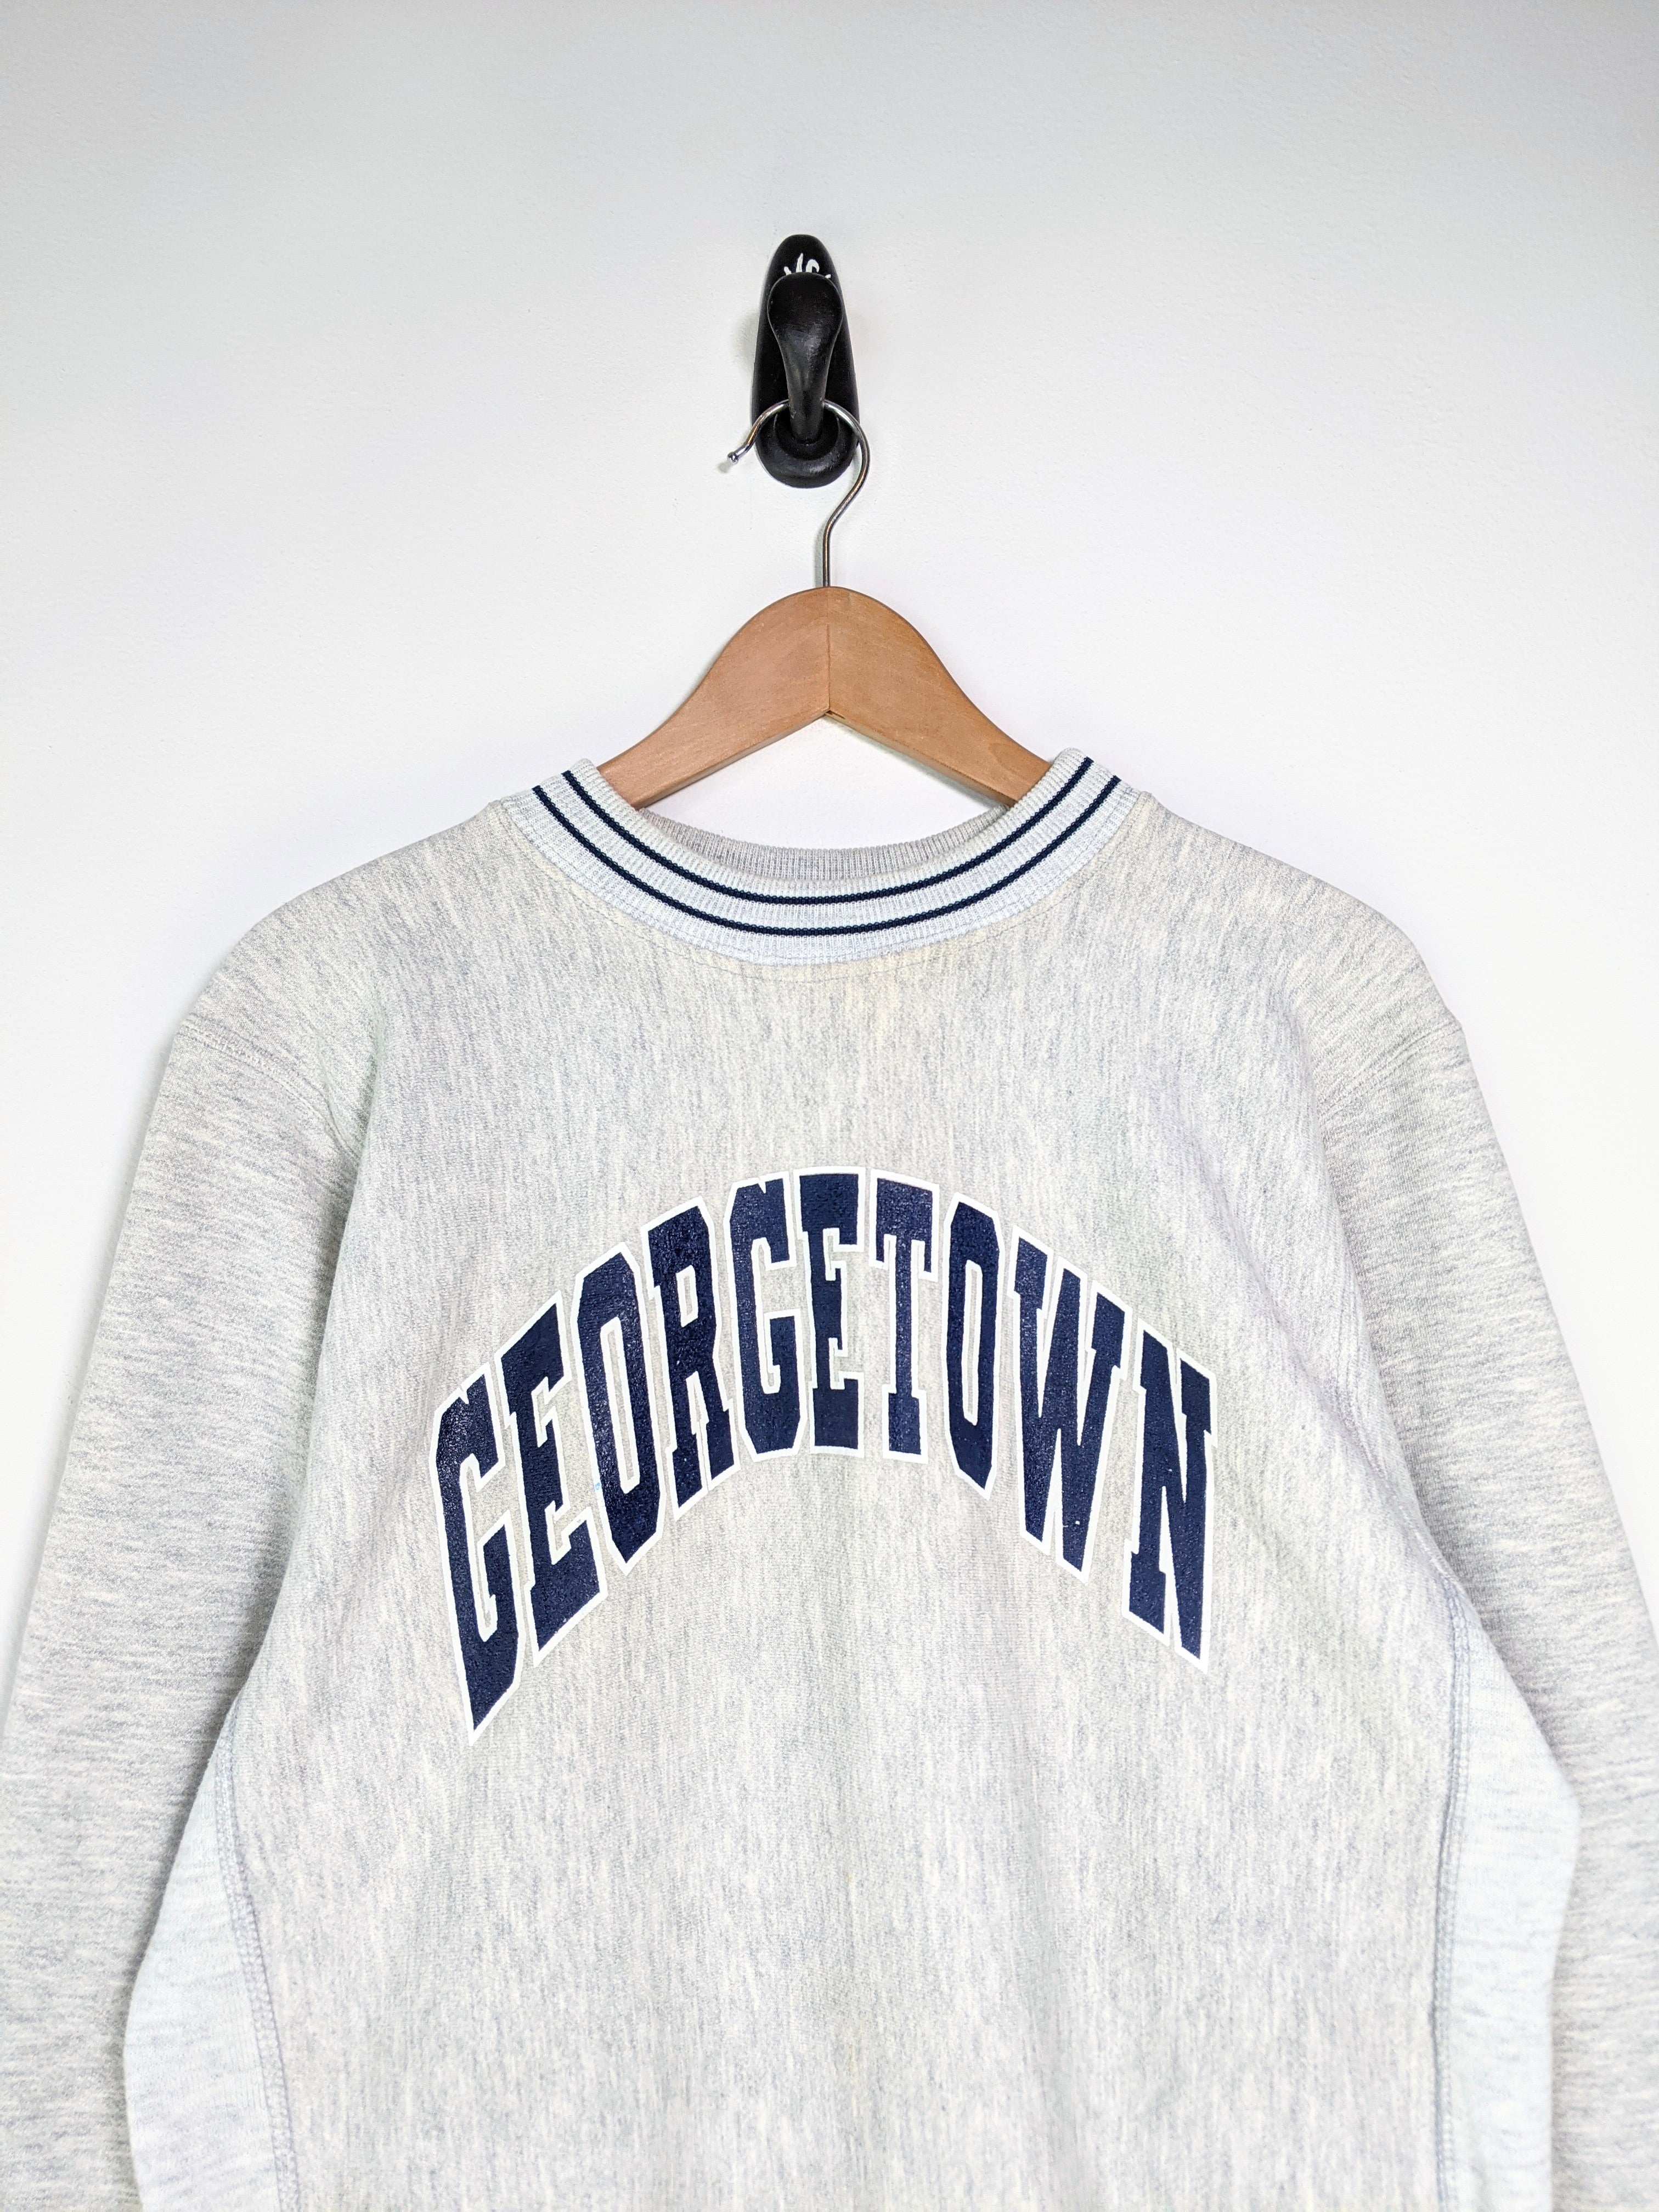 Georgetown University Sweatshirt (M)